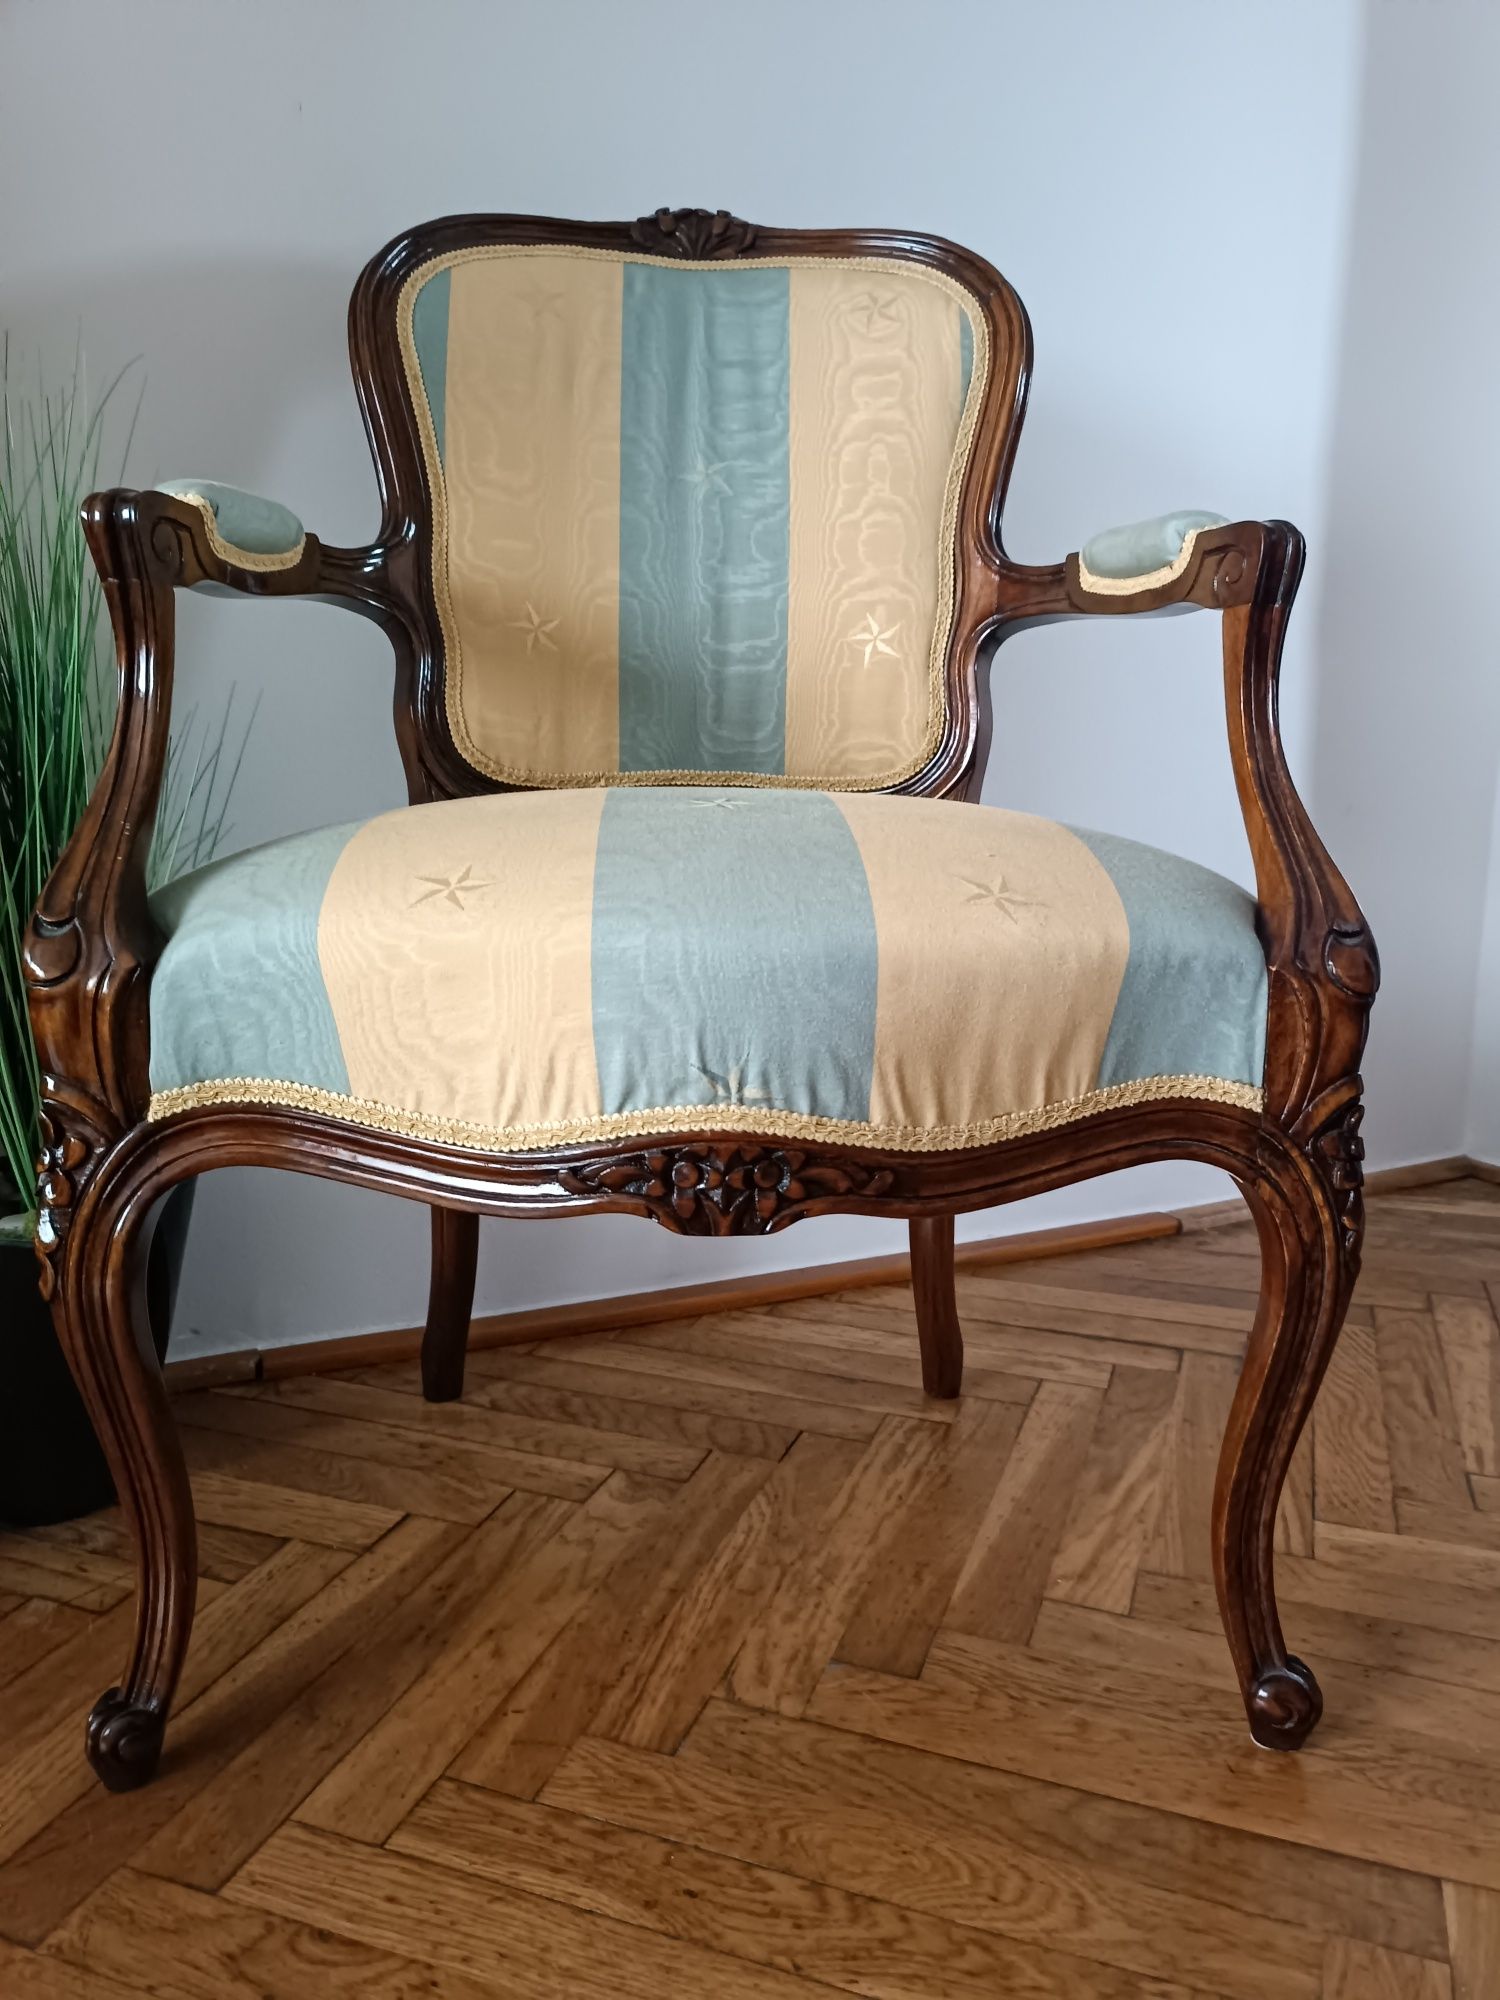 Fotel w stylu Ludwika, Ludwikowski